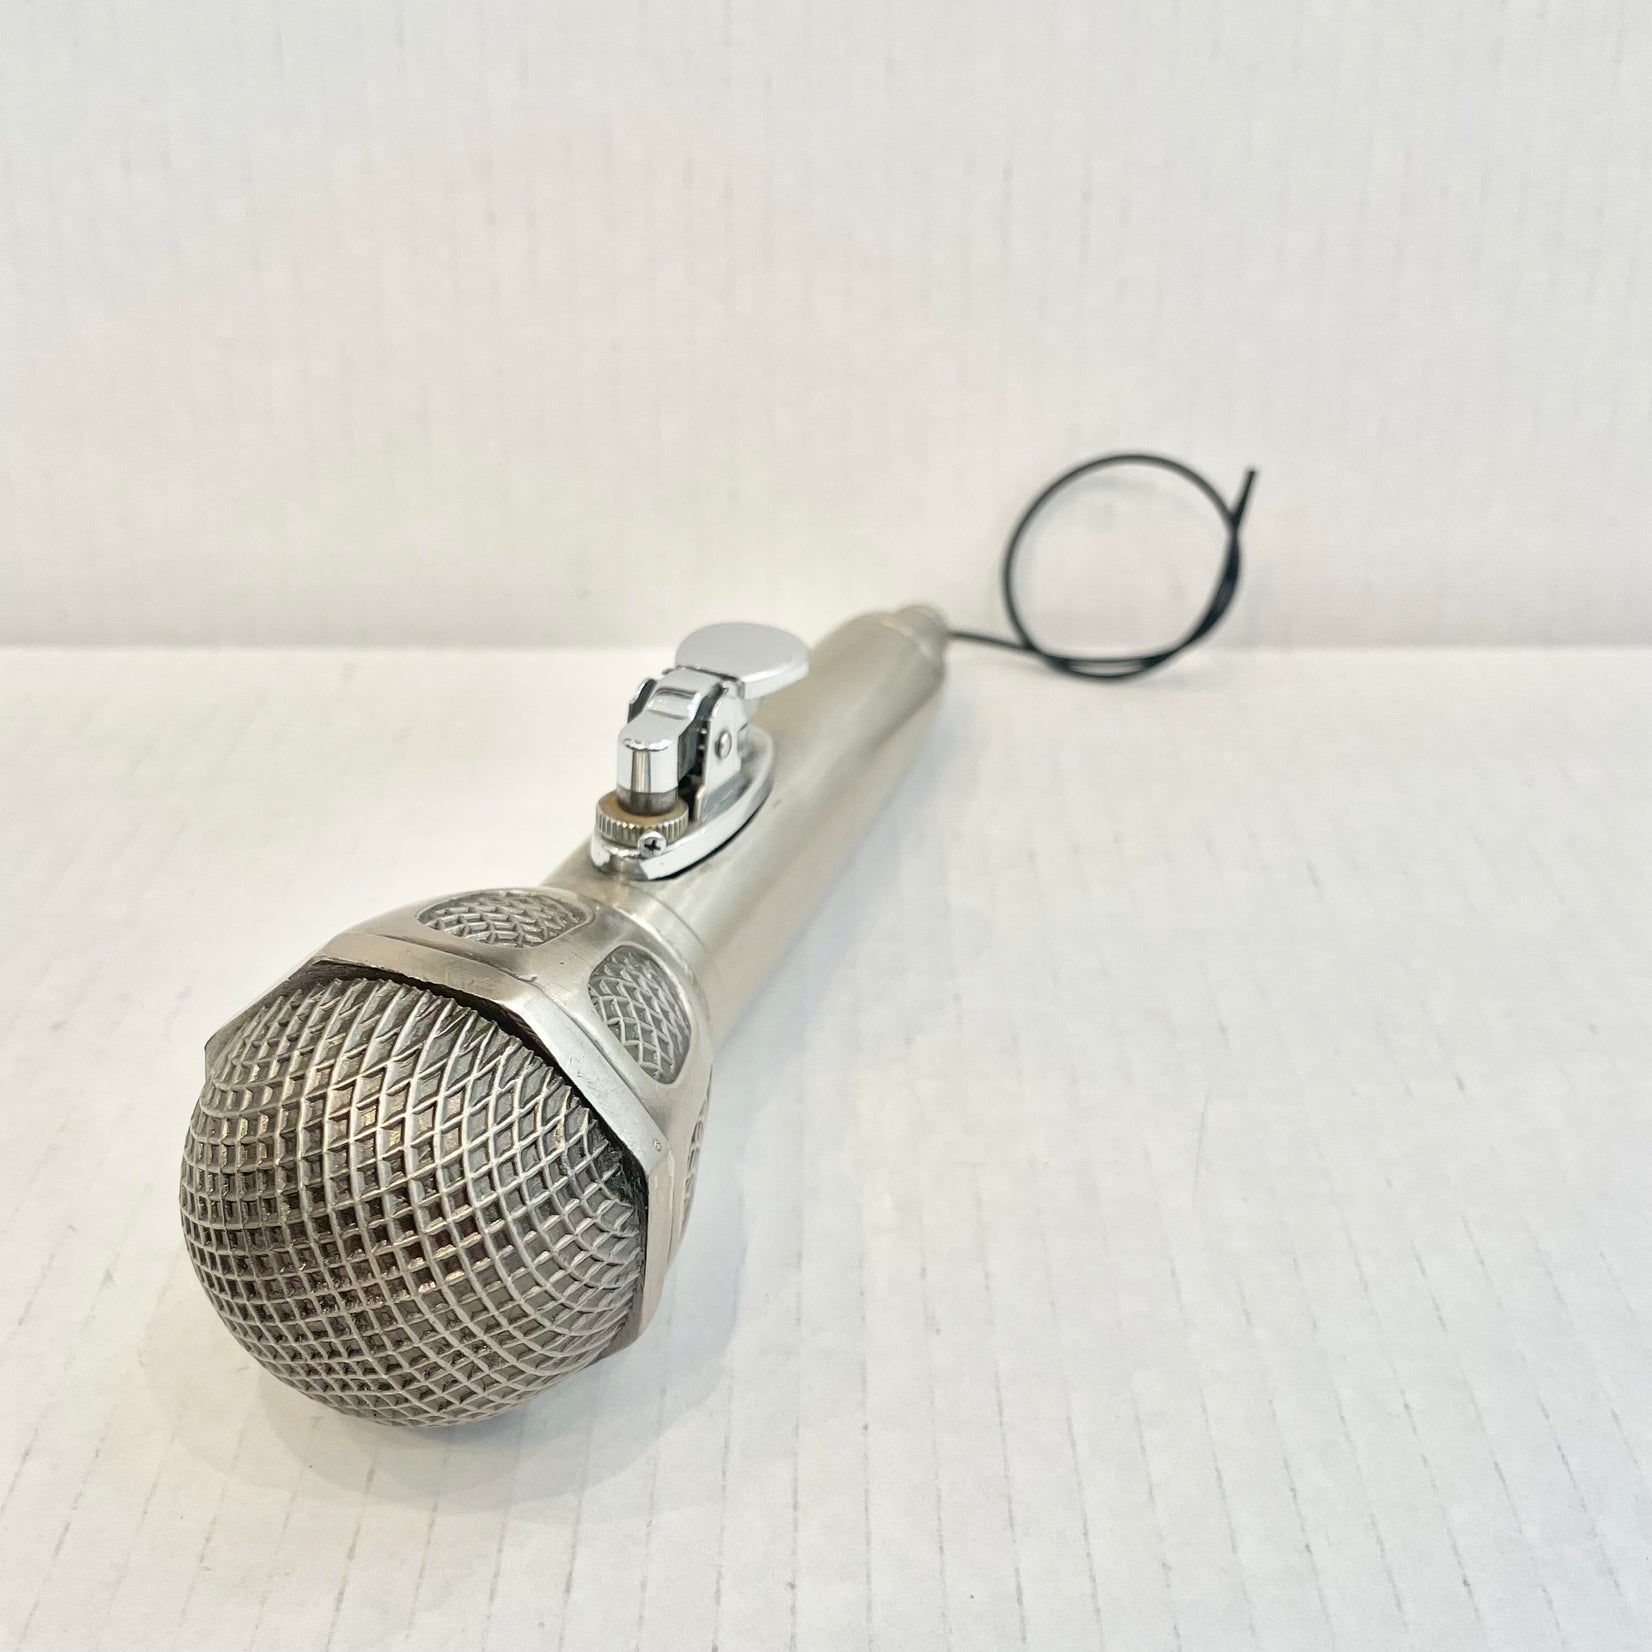 Microphone Lighter, 1980s Japan